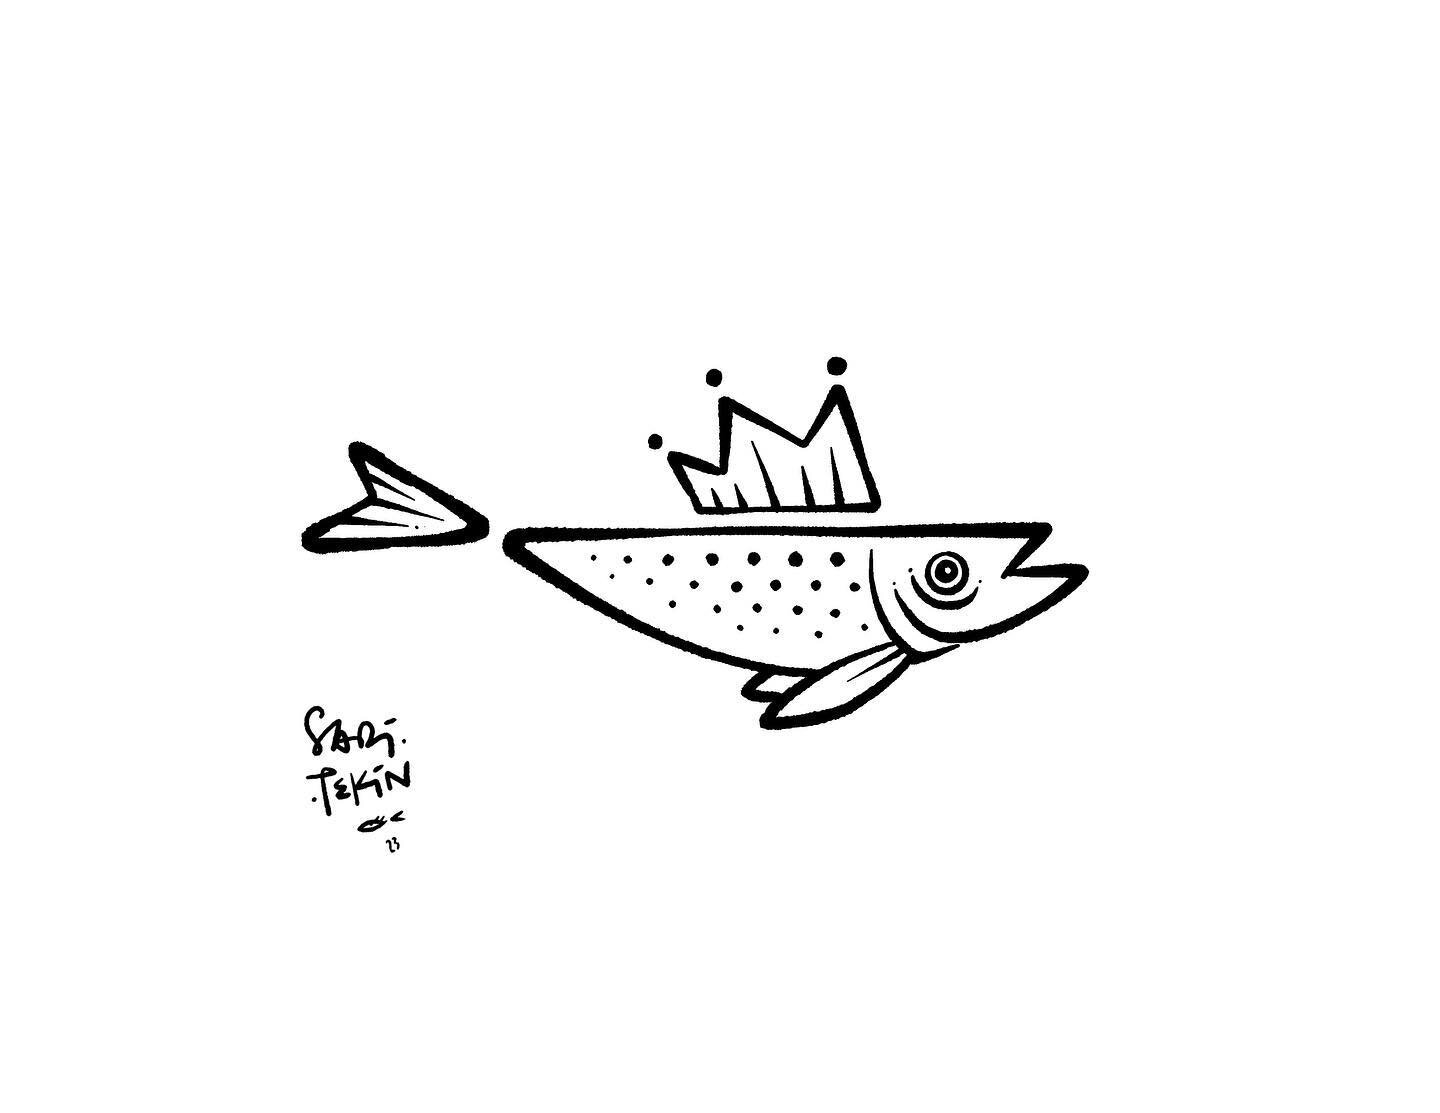 the Fish King! 

#sketch #illustration #fish #textileart #jeans #newyork #saditekin